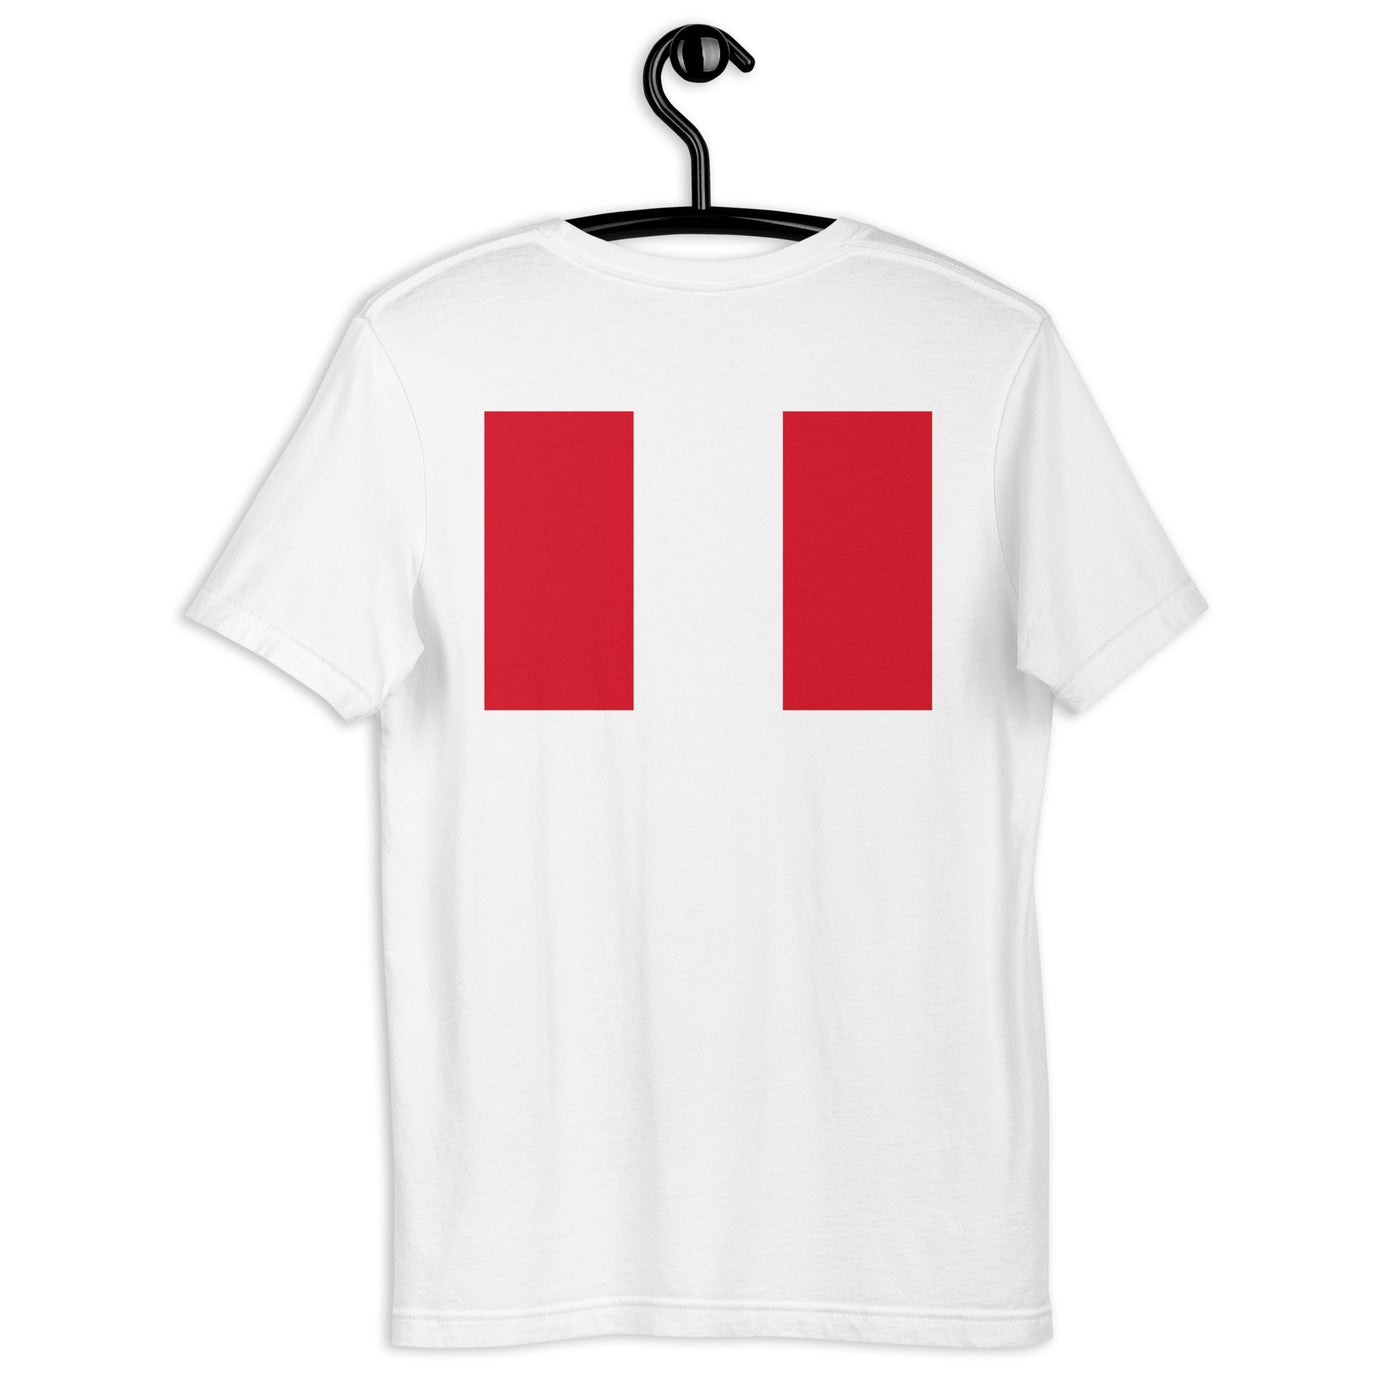 Peru POR VIDA (Black Text) Unisex t-shirt